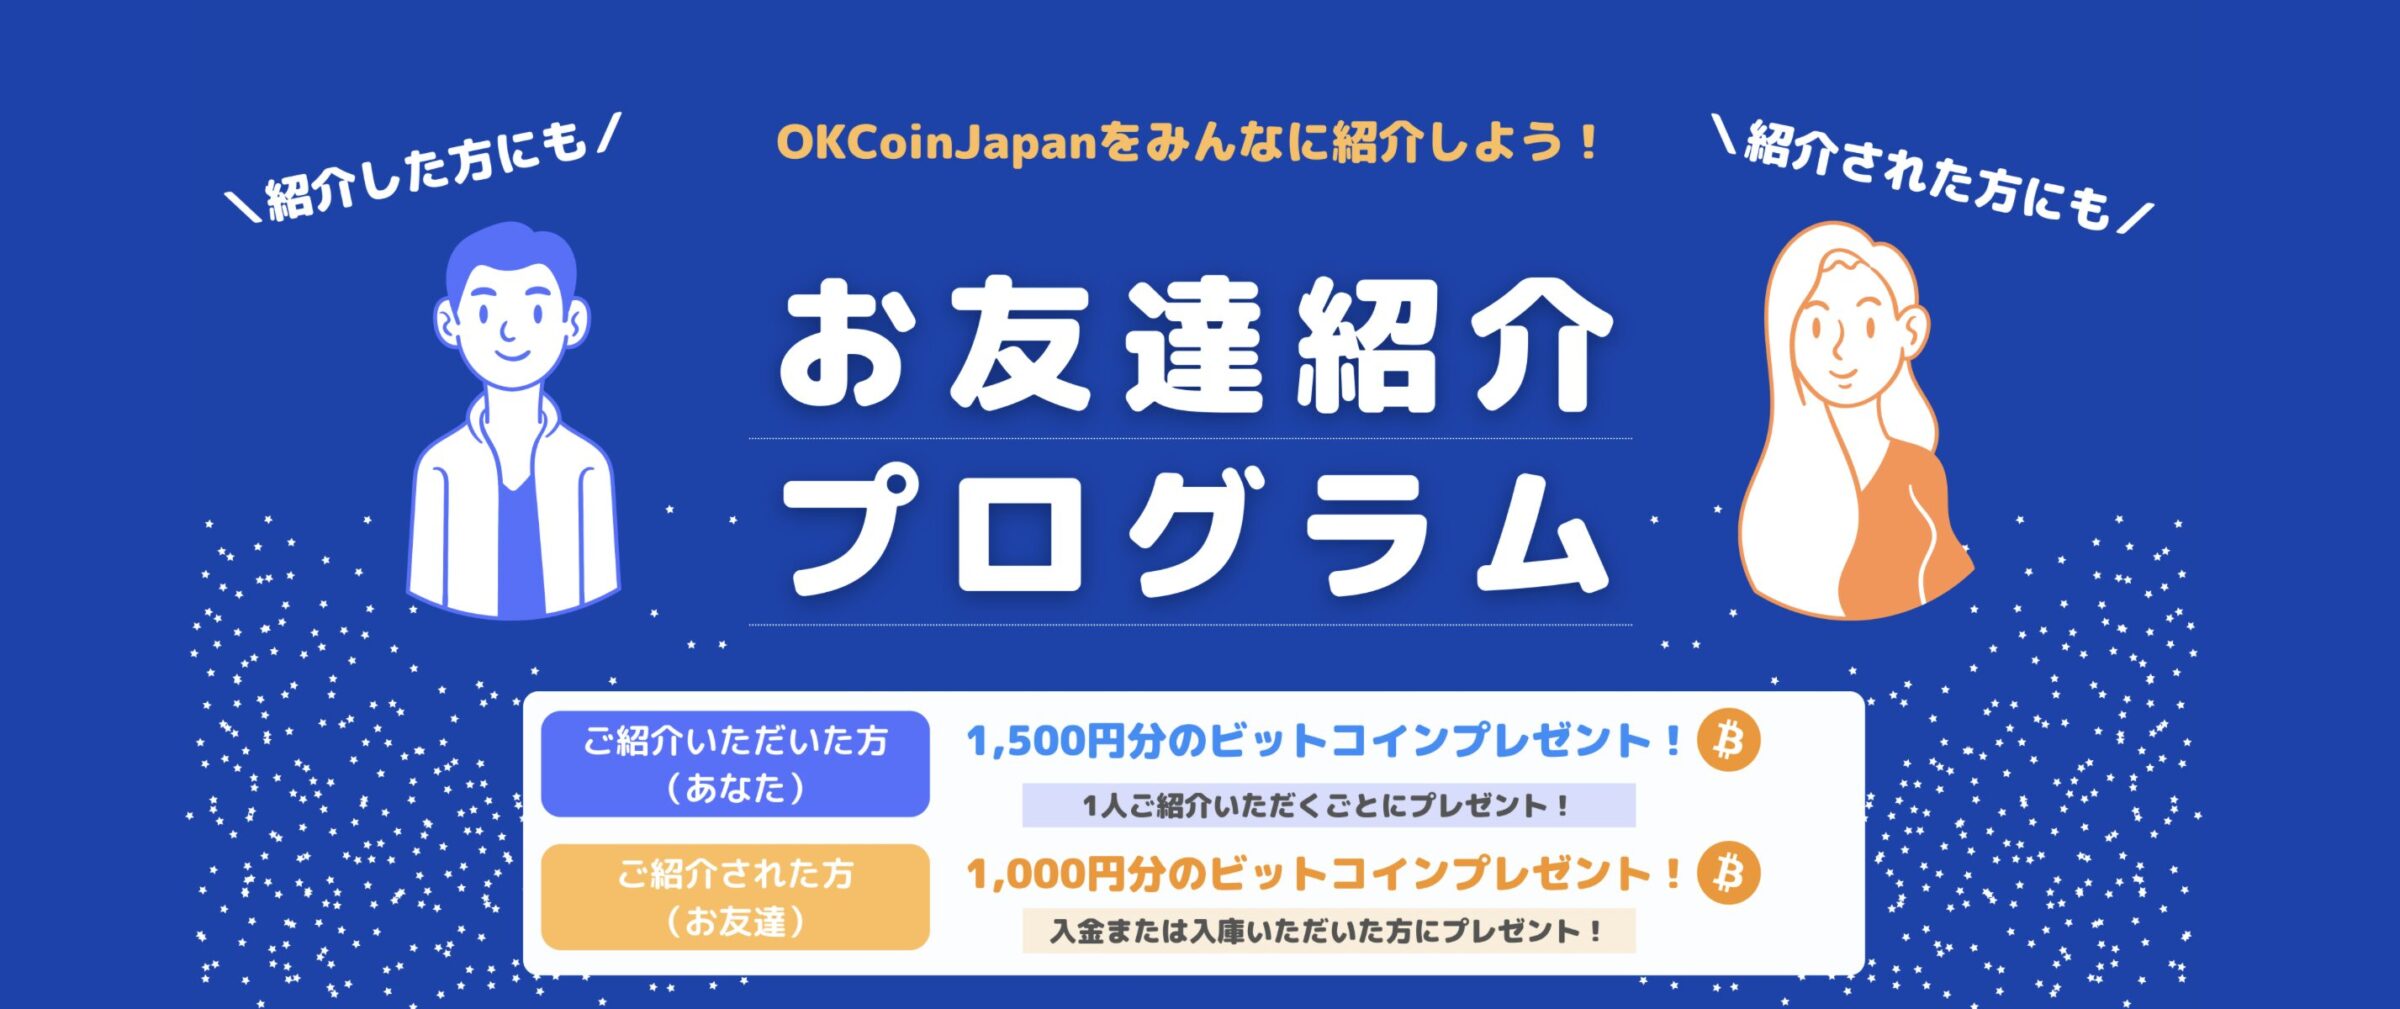 【OKCoinJapan】友達紹介キャンペーン